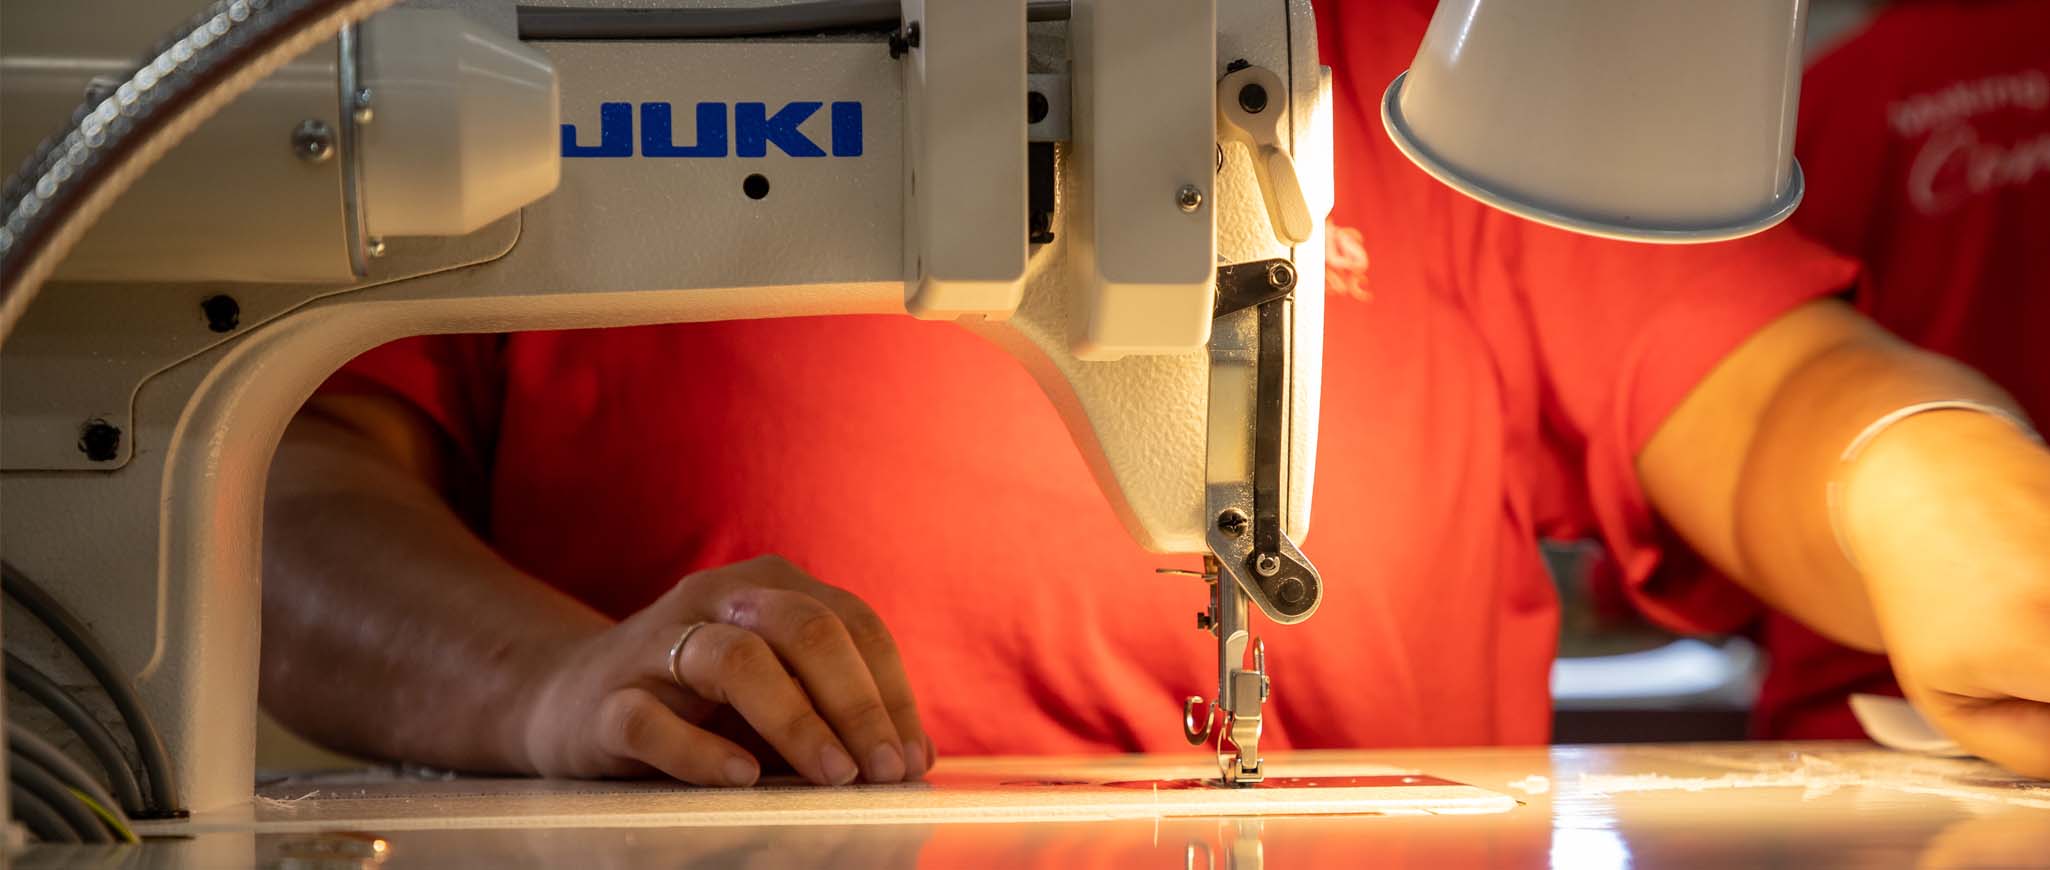 juki-sewing-machine